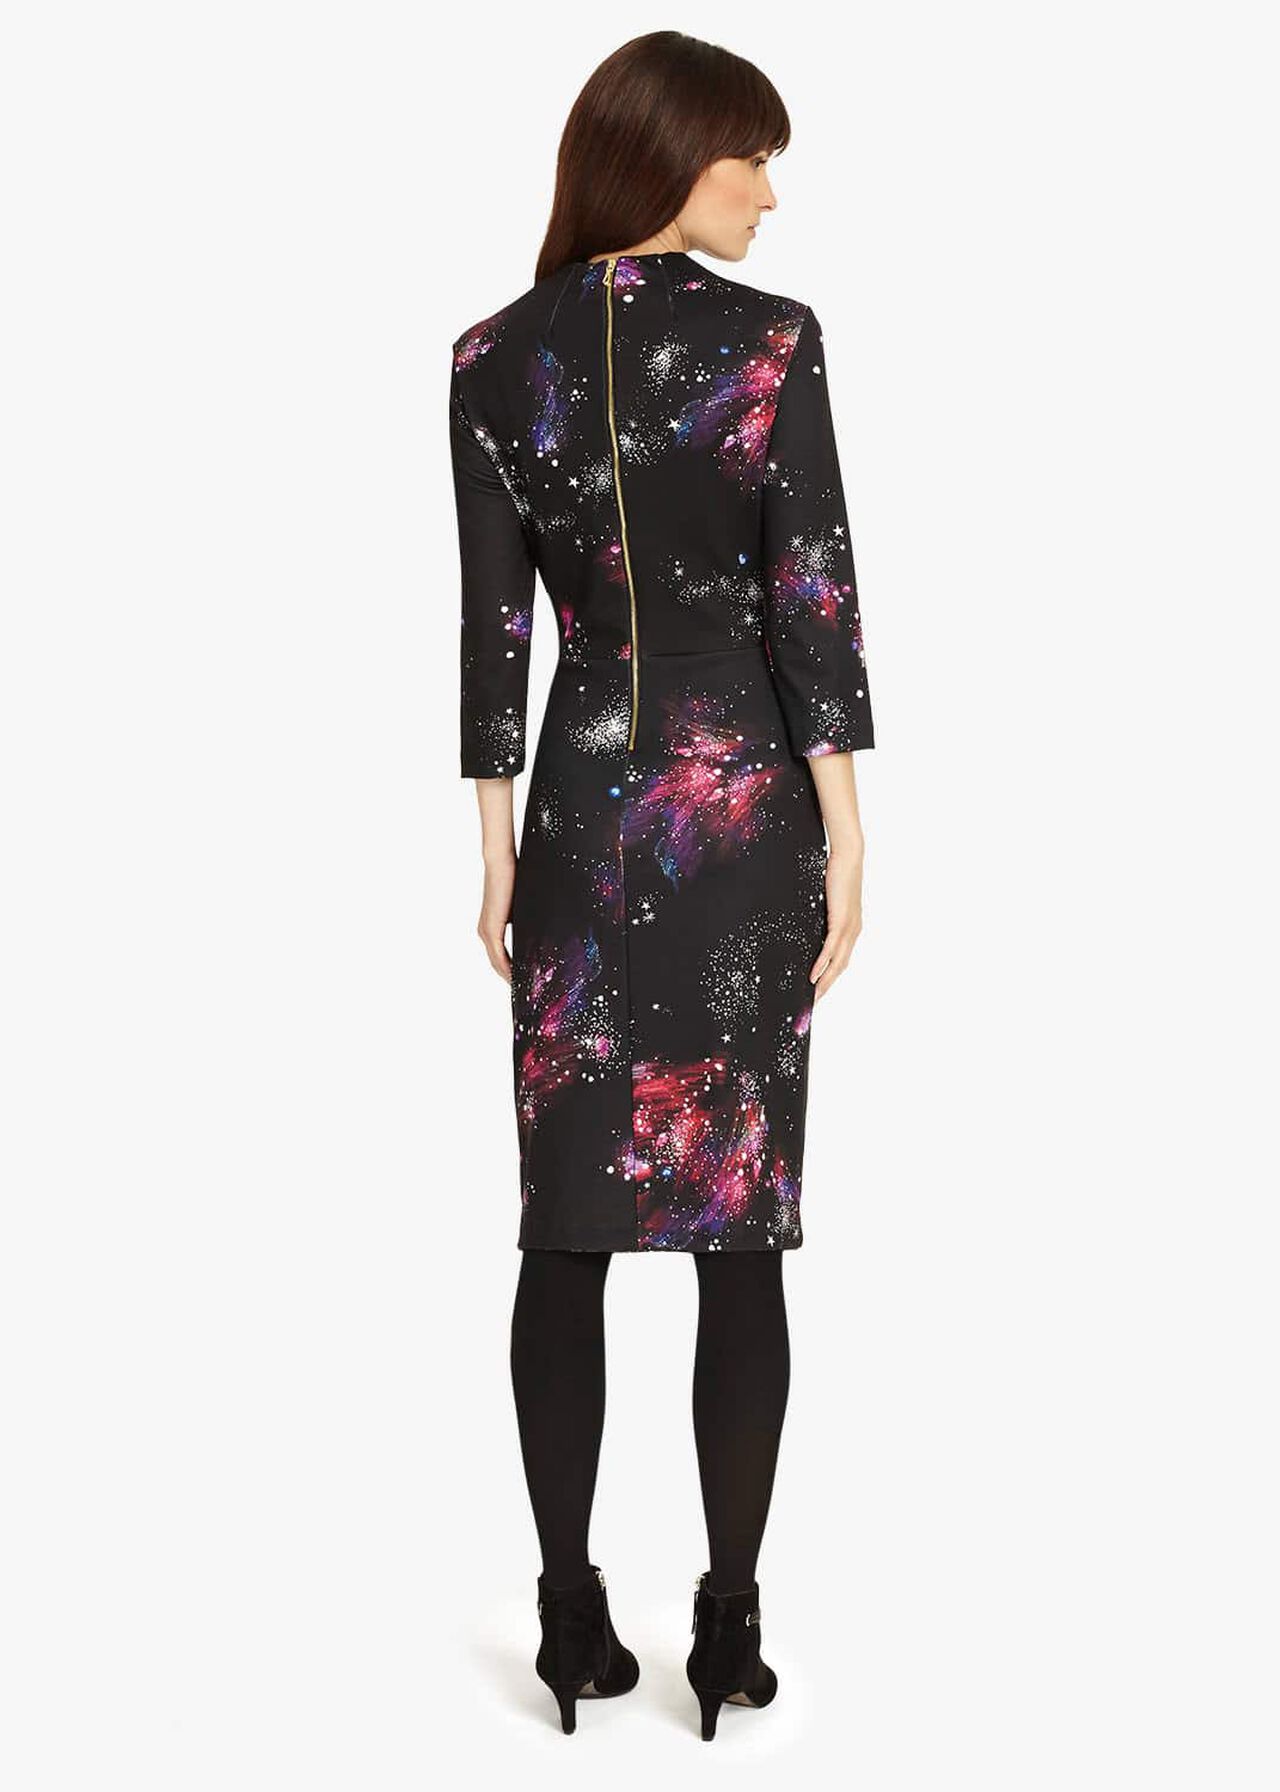 Constellation Print Dress